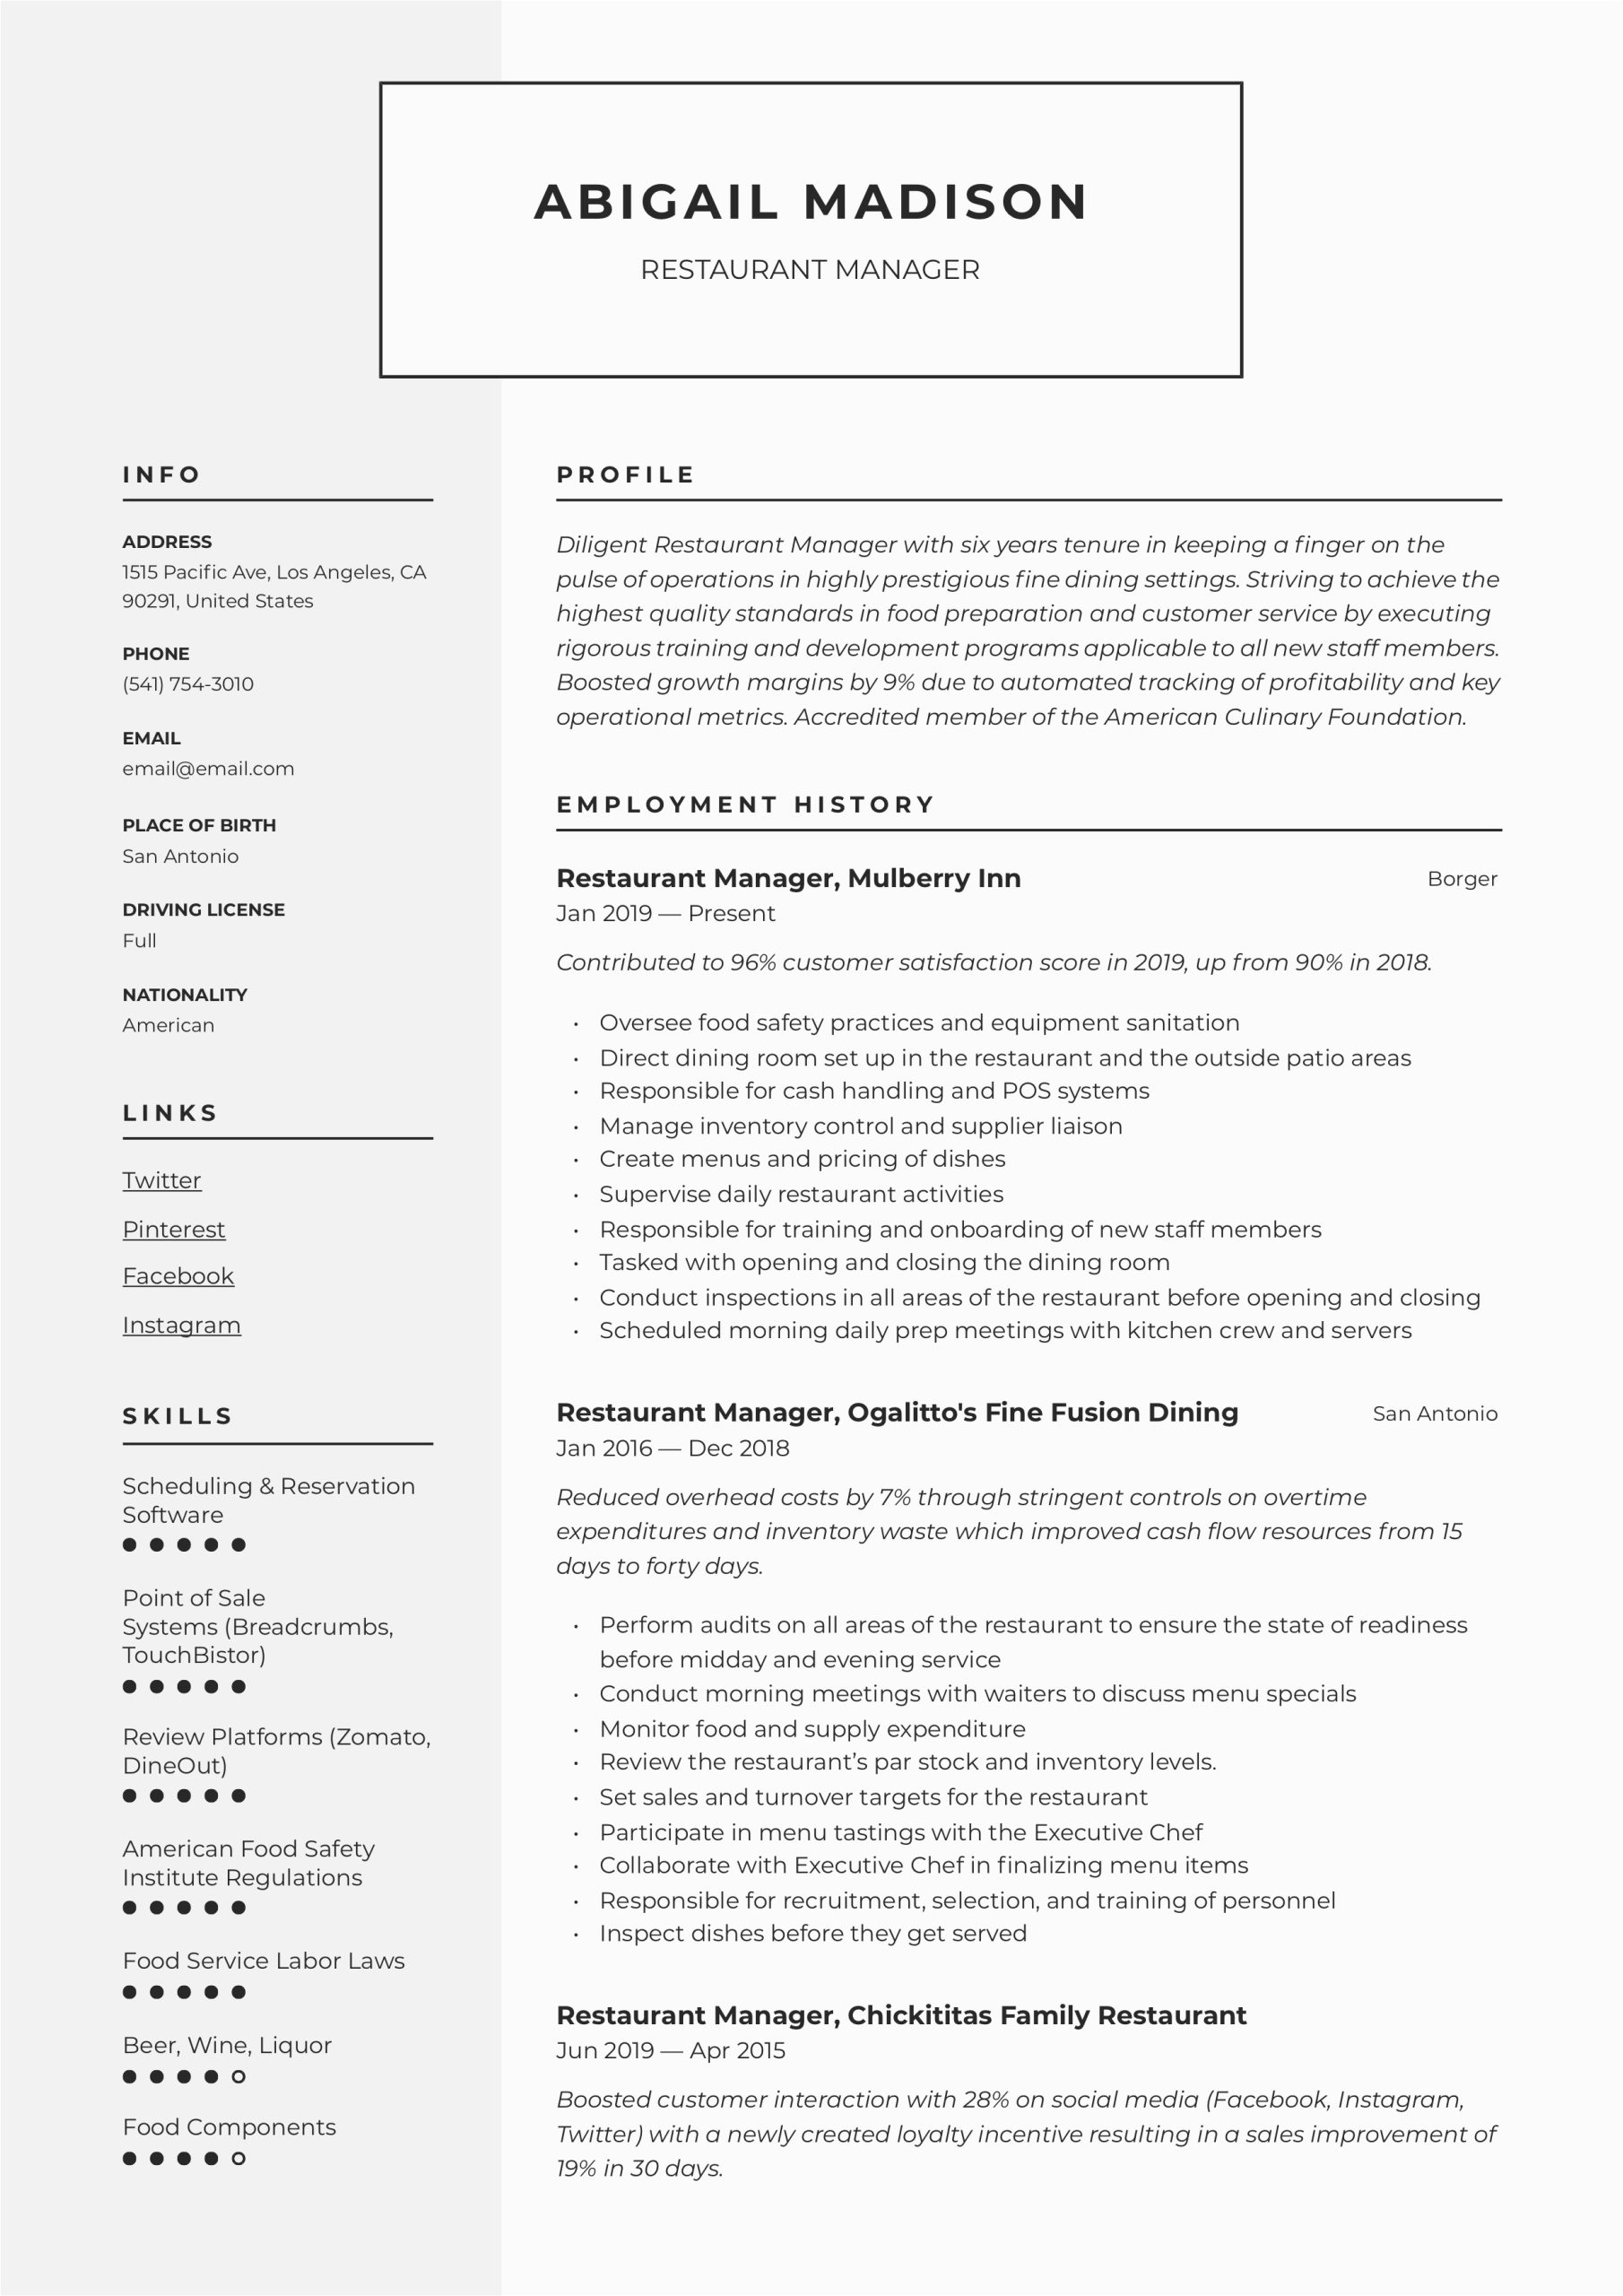 Sample Resume format for Restaurant Manager Restaurant Manager Resume & Writing Guide 12 Examples